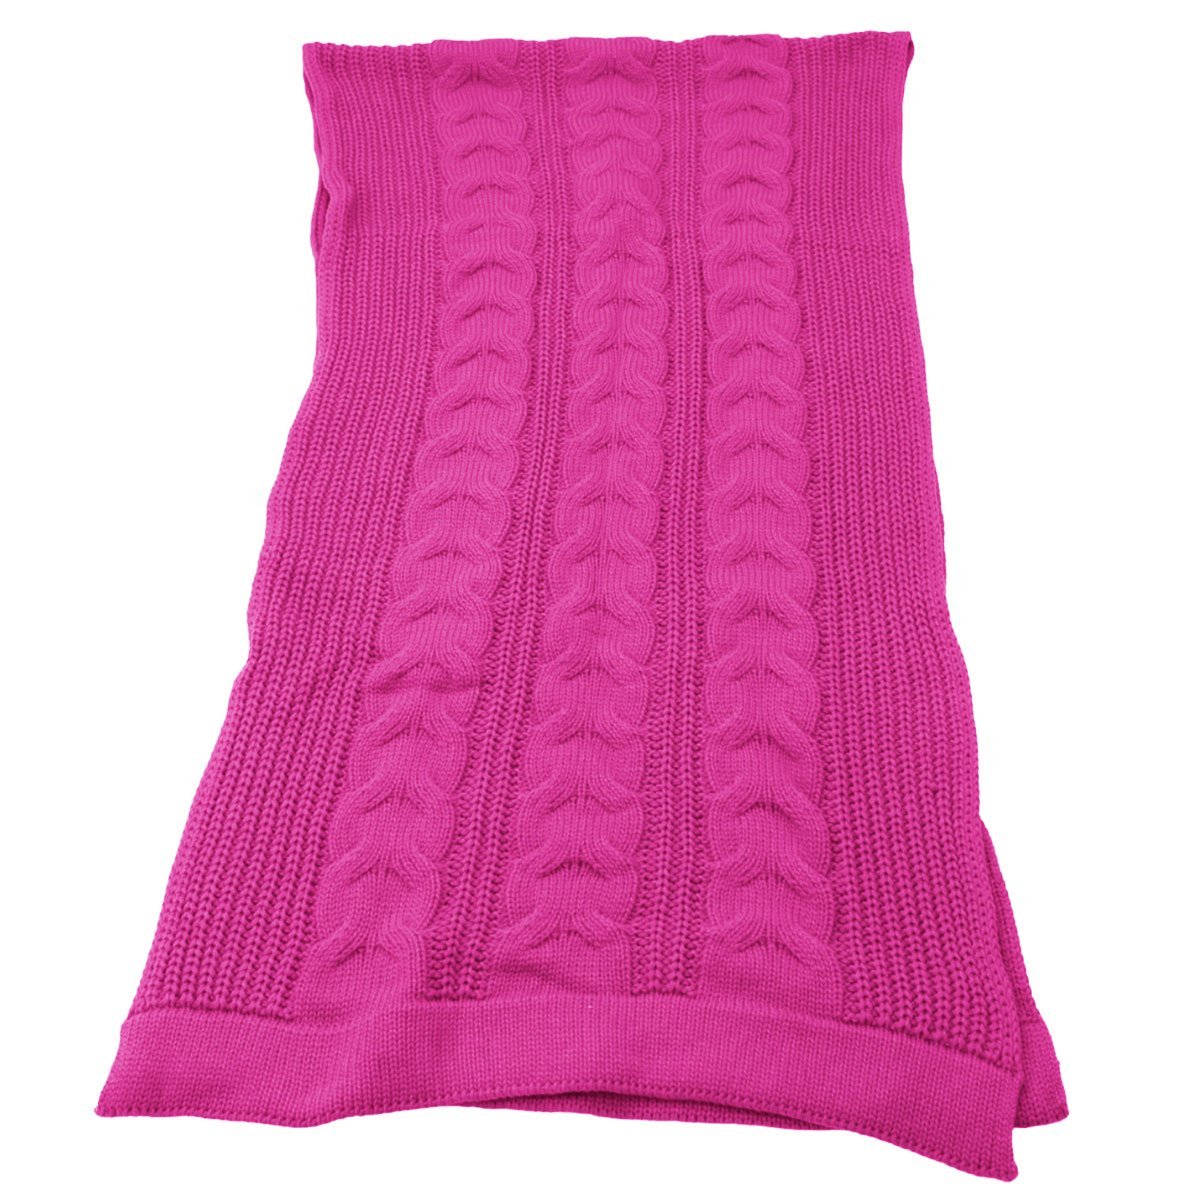 Peseira de tricot cama Queen 60 x 220cm tressage Rosa Pink - 1